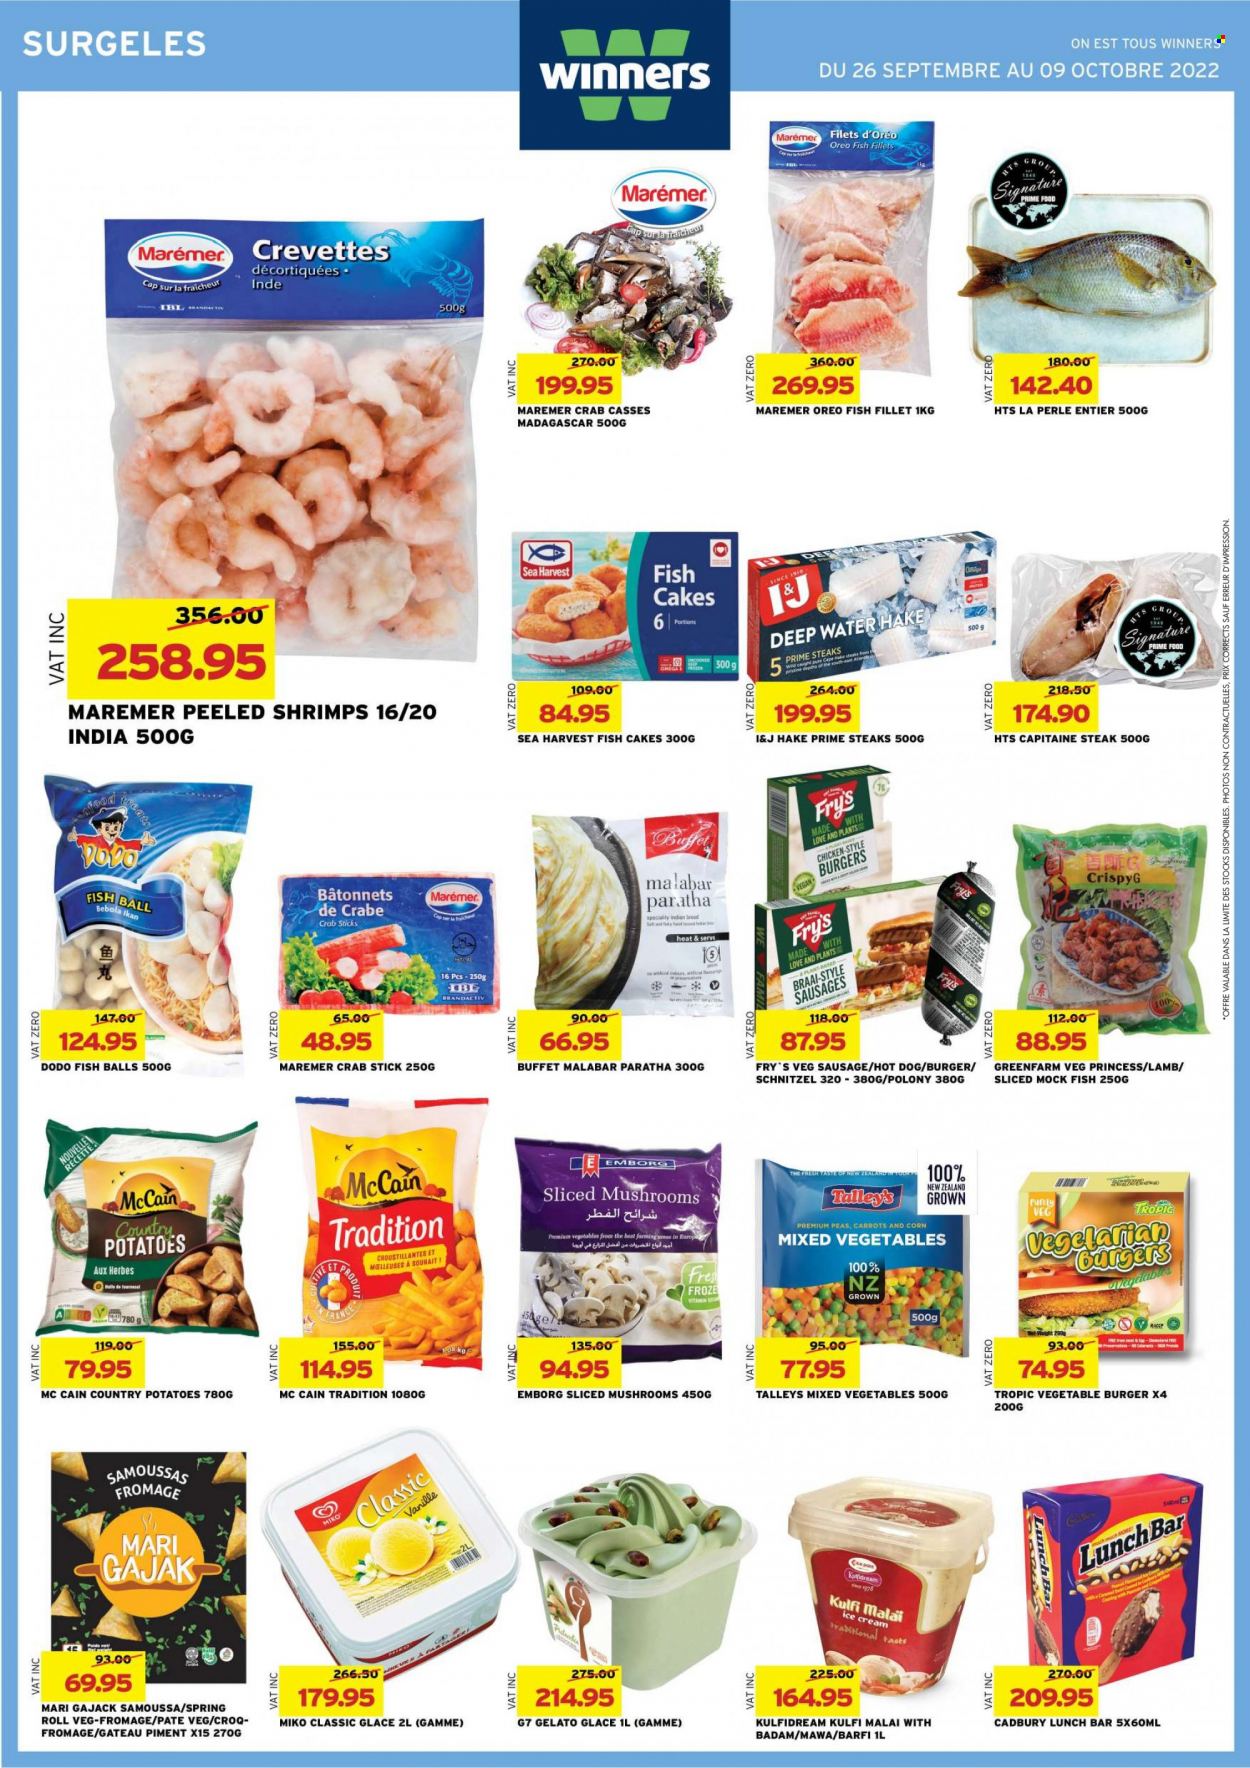 thumbnail - Winner's Catalogue - 26.09.2022 - 9.10.2022 - Sales products - mushrooms, bread, carrots, potatoes, fish fillets, hake, crab, shrimps, Sea Harvest, hot dog, hamburger, schnitzel, veggie burger, polony, sausage, ice cream, gelato, mixed vegetables, McCain, fish cake, Cadbury, pan, Oreo, steak. Page 32.